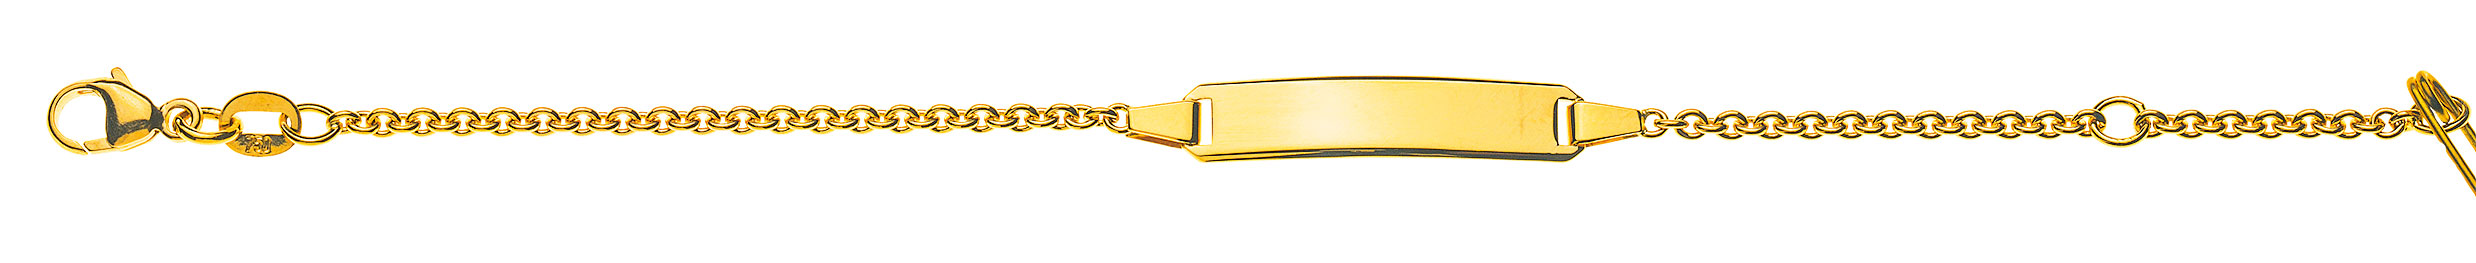 AURONOS Prestige ID-Bracelet 18k Gelbgold Rundankerkette 18cm